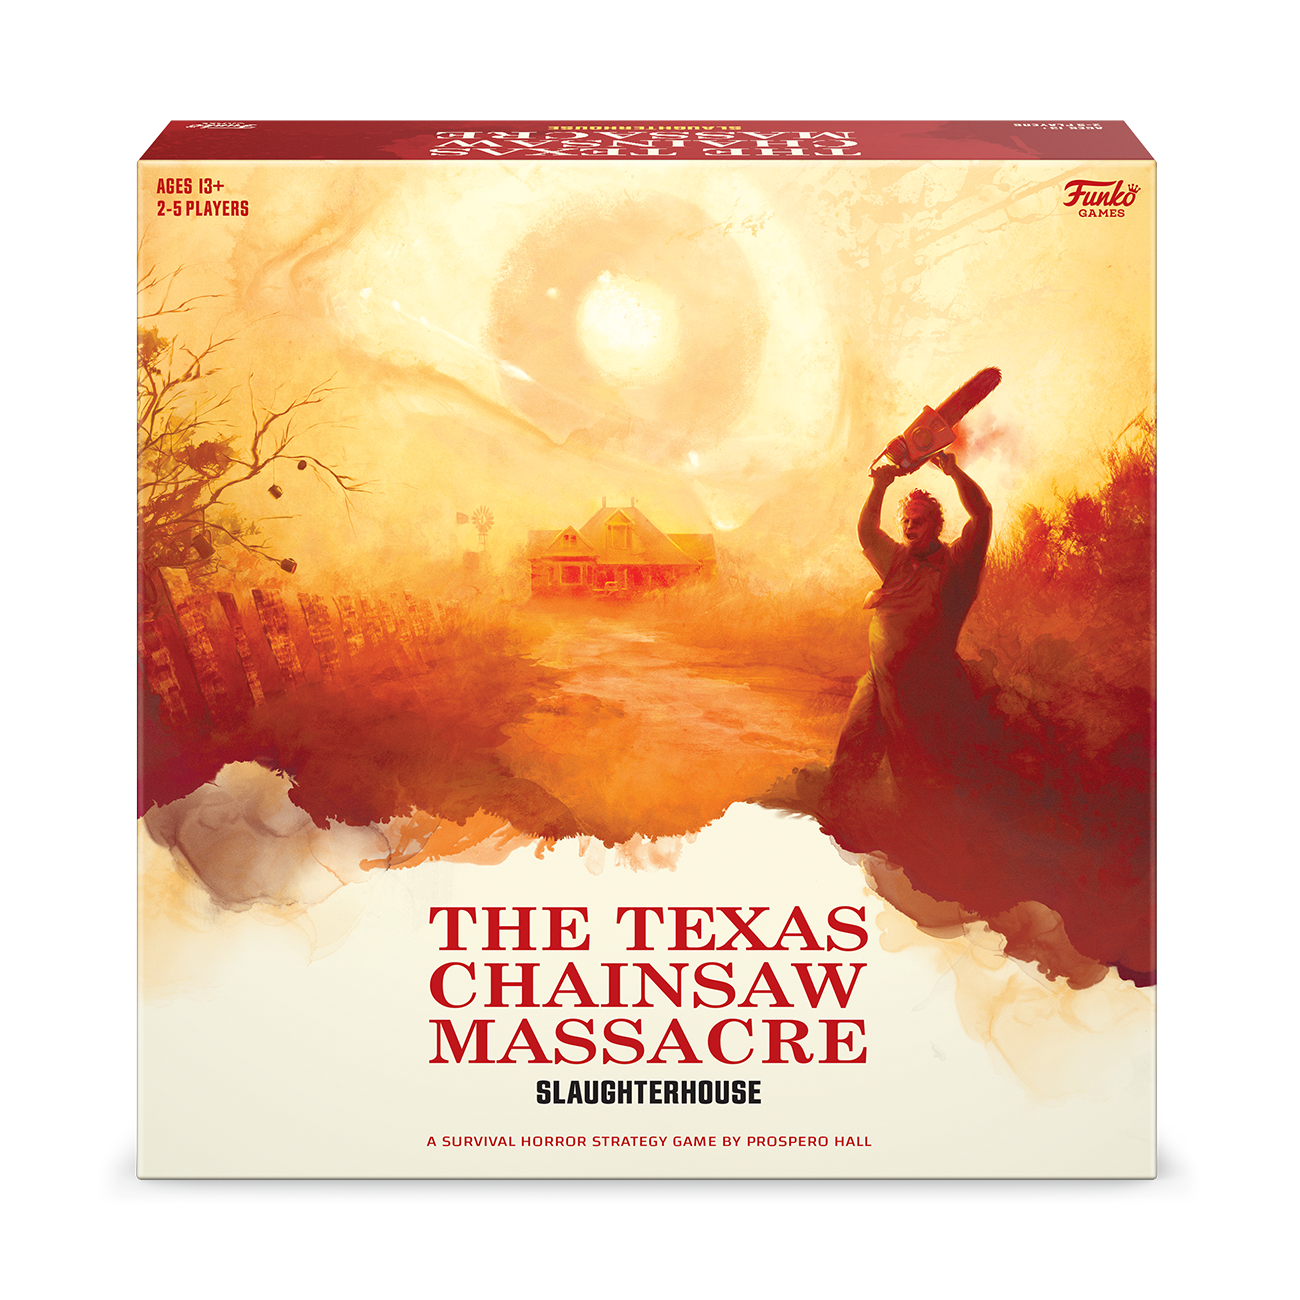 The Texas Chain Saw Massacre - Análise do Jogo